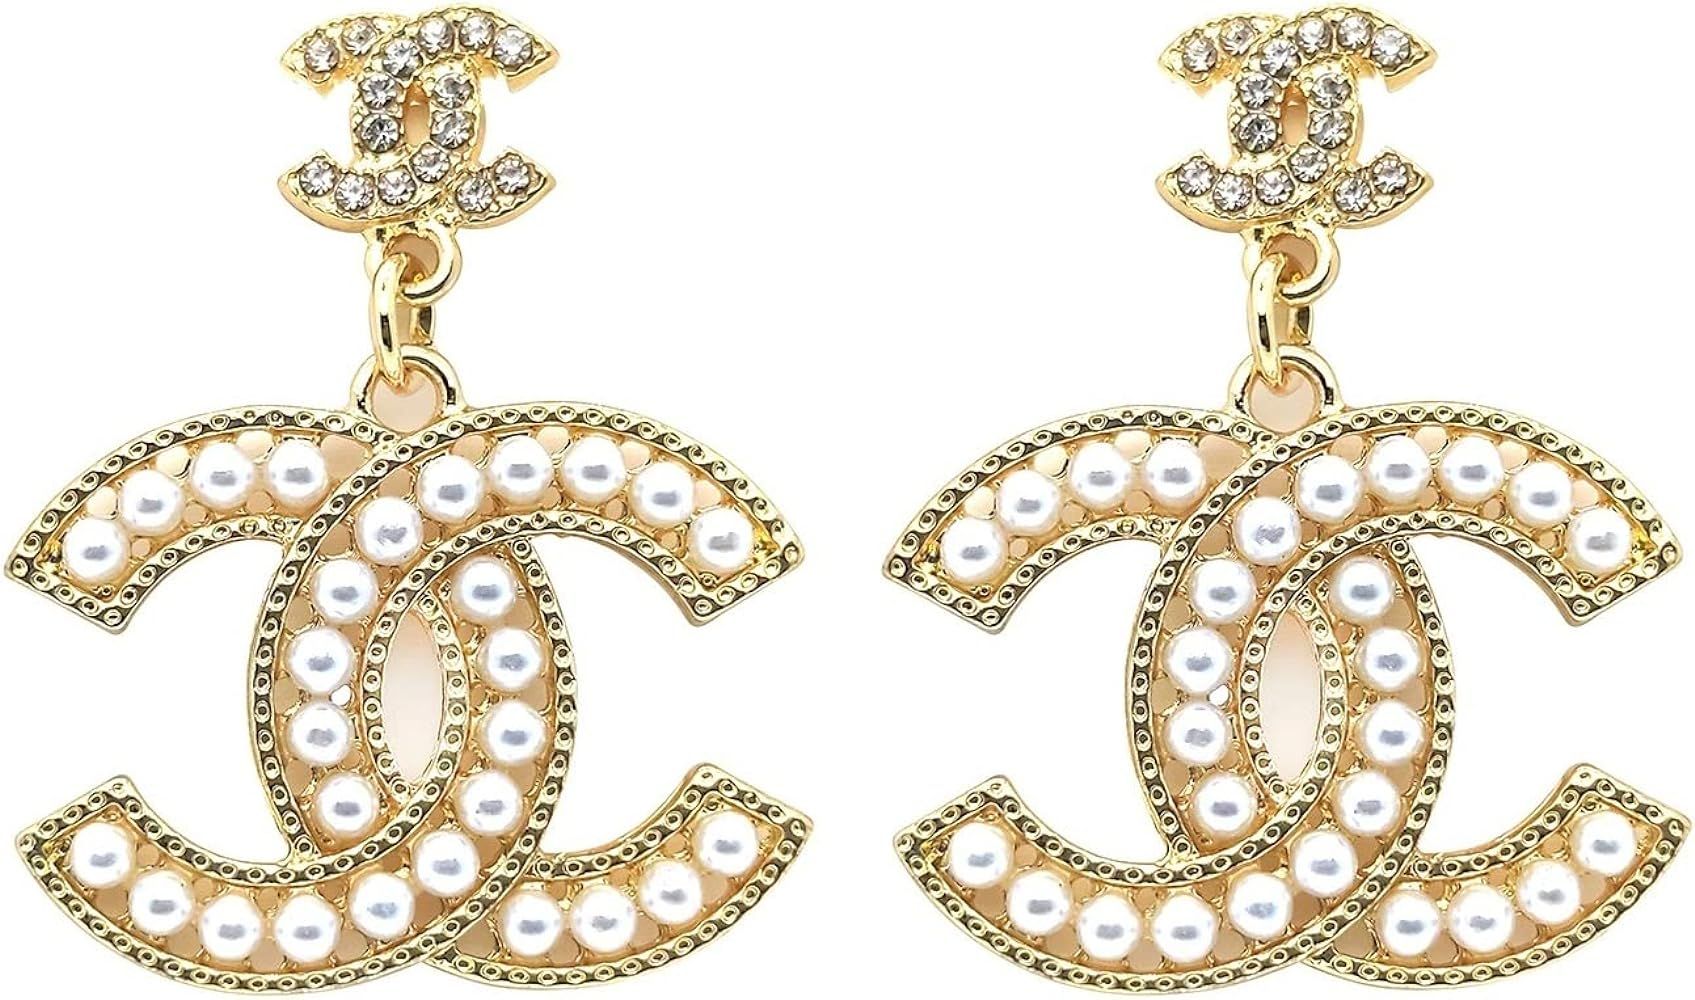 cc earrings Letter C Earrings C Stud Earrings for Women Birthday gift or Casual or Daily Wear | Amazon (US)